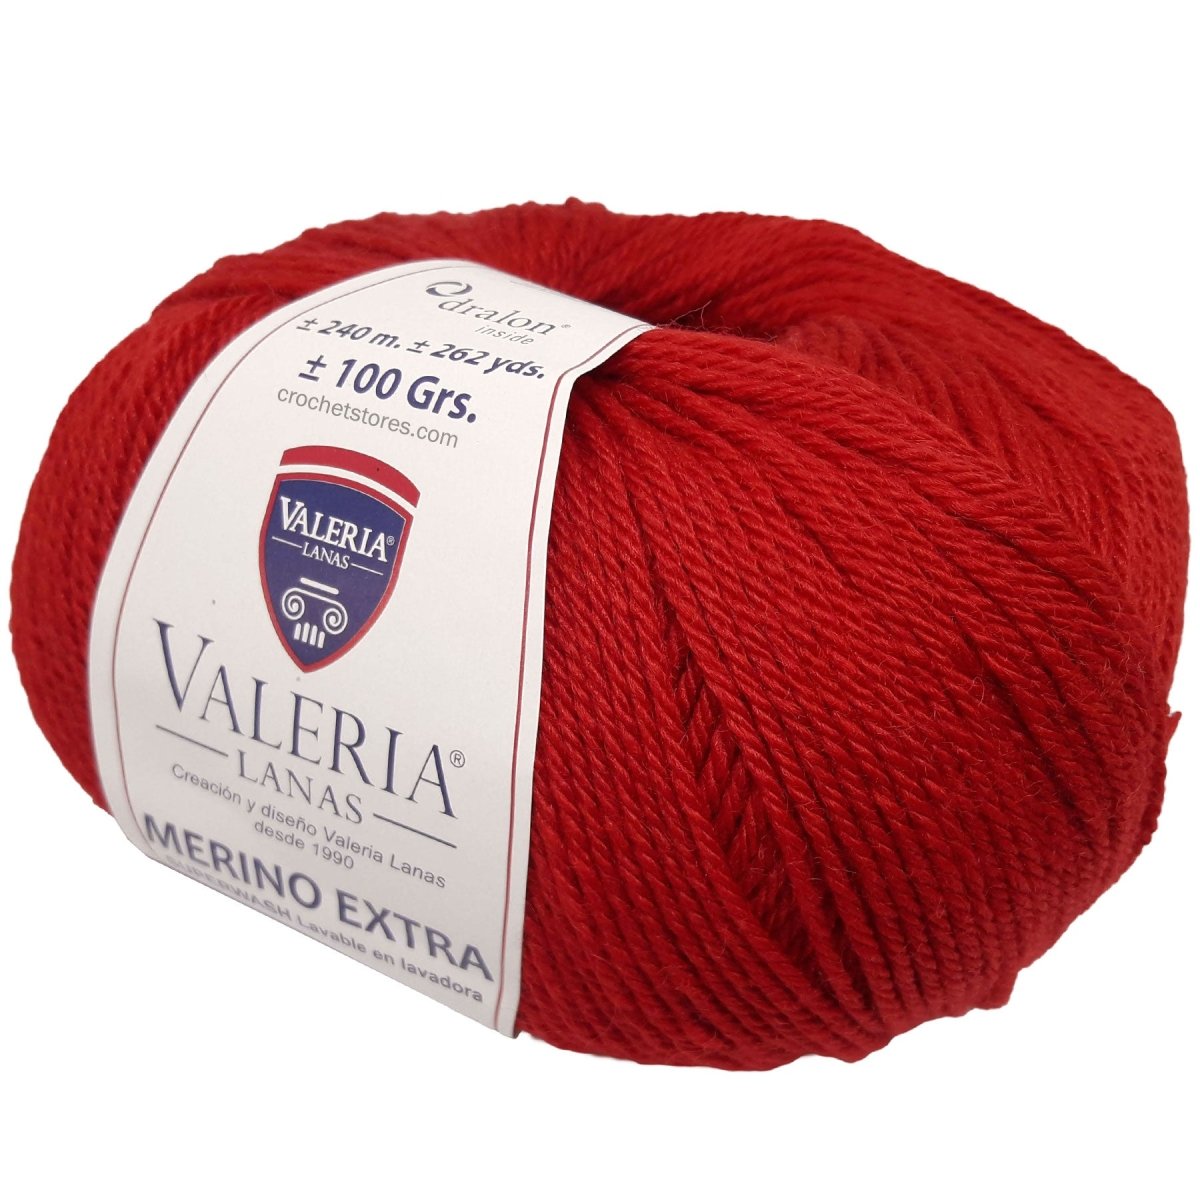 MERINO EXTRA - Crochetstores1009-0258435411405991